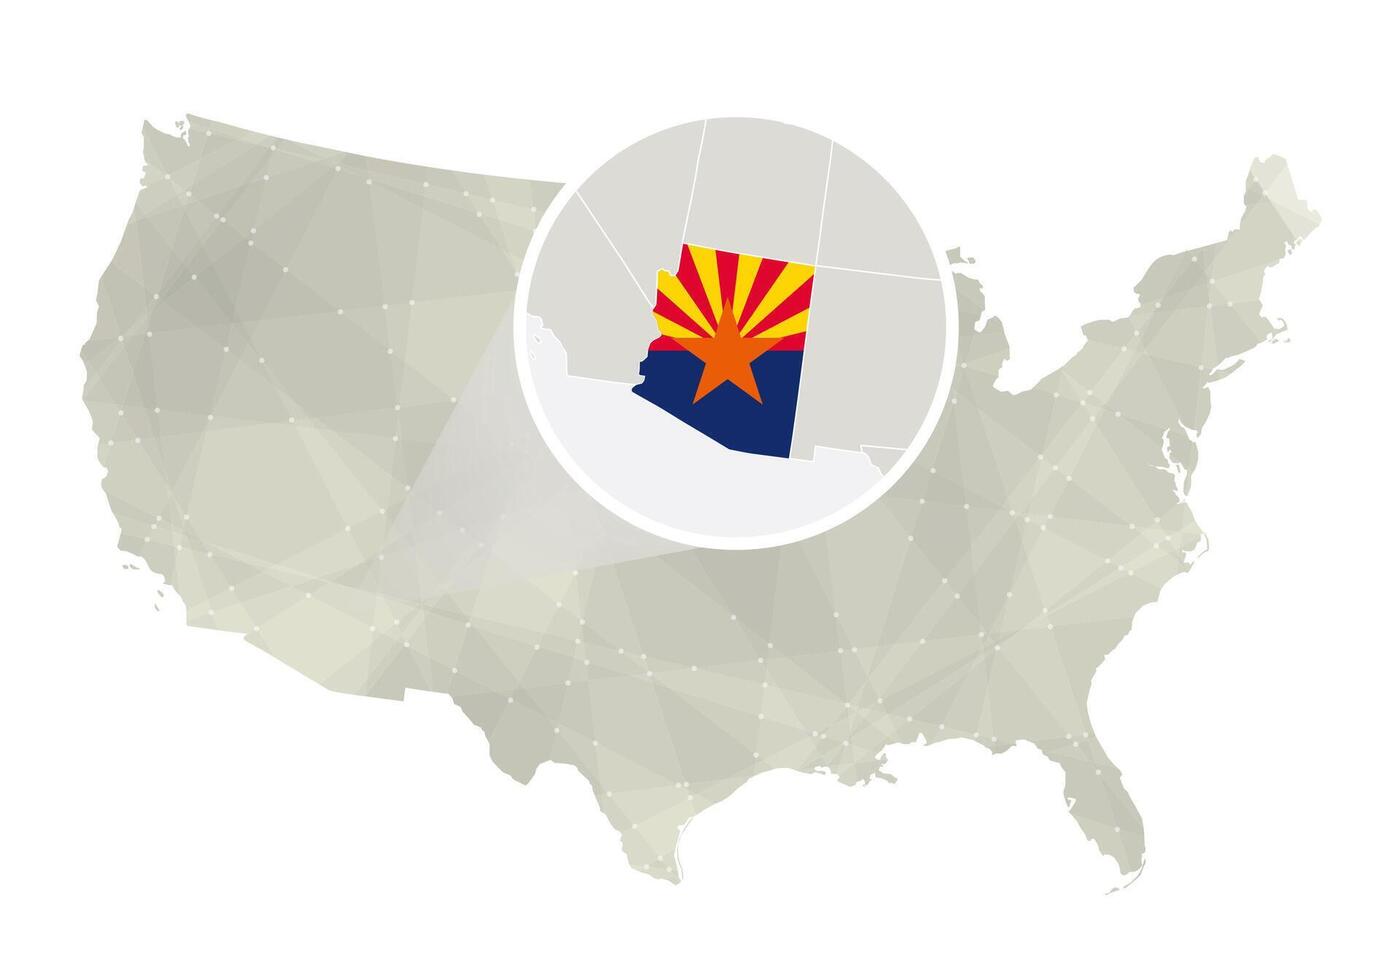 poligonal abstrato EUA mapa com ampliado Arizona estado. vetor